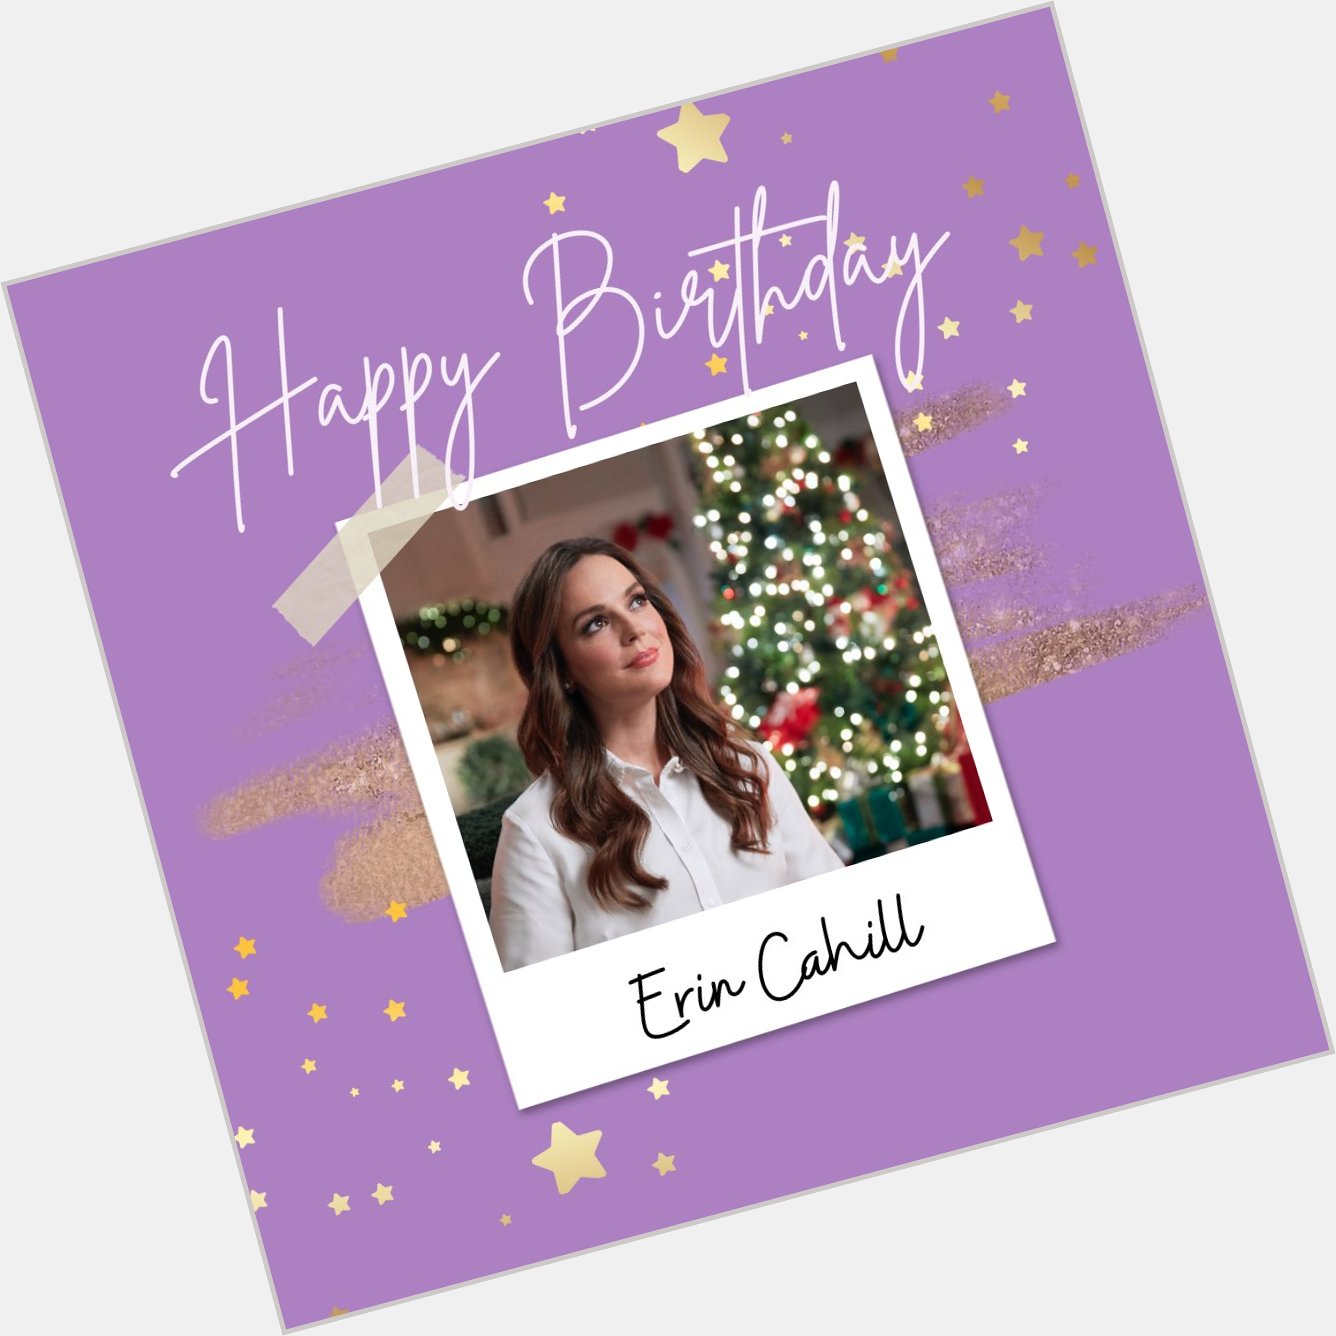 Happy birthday Erin Cahill.  